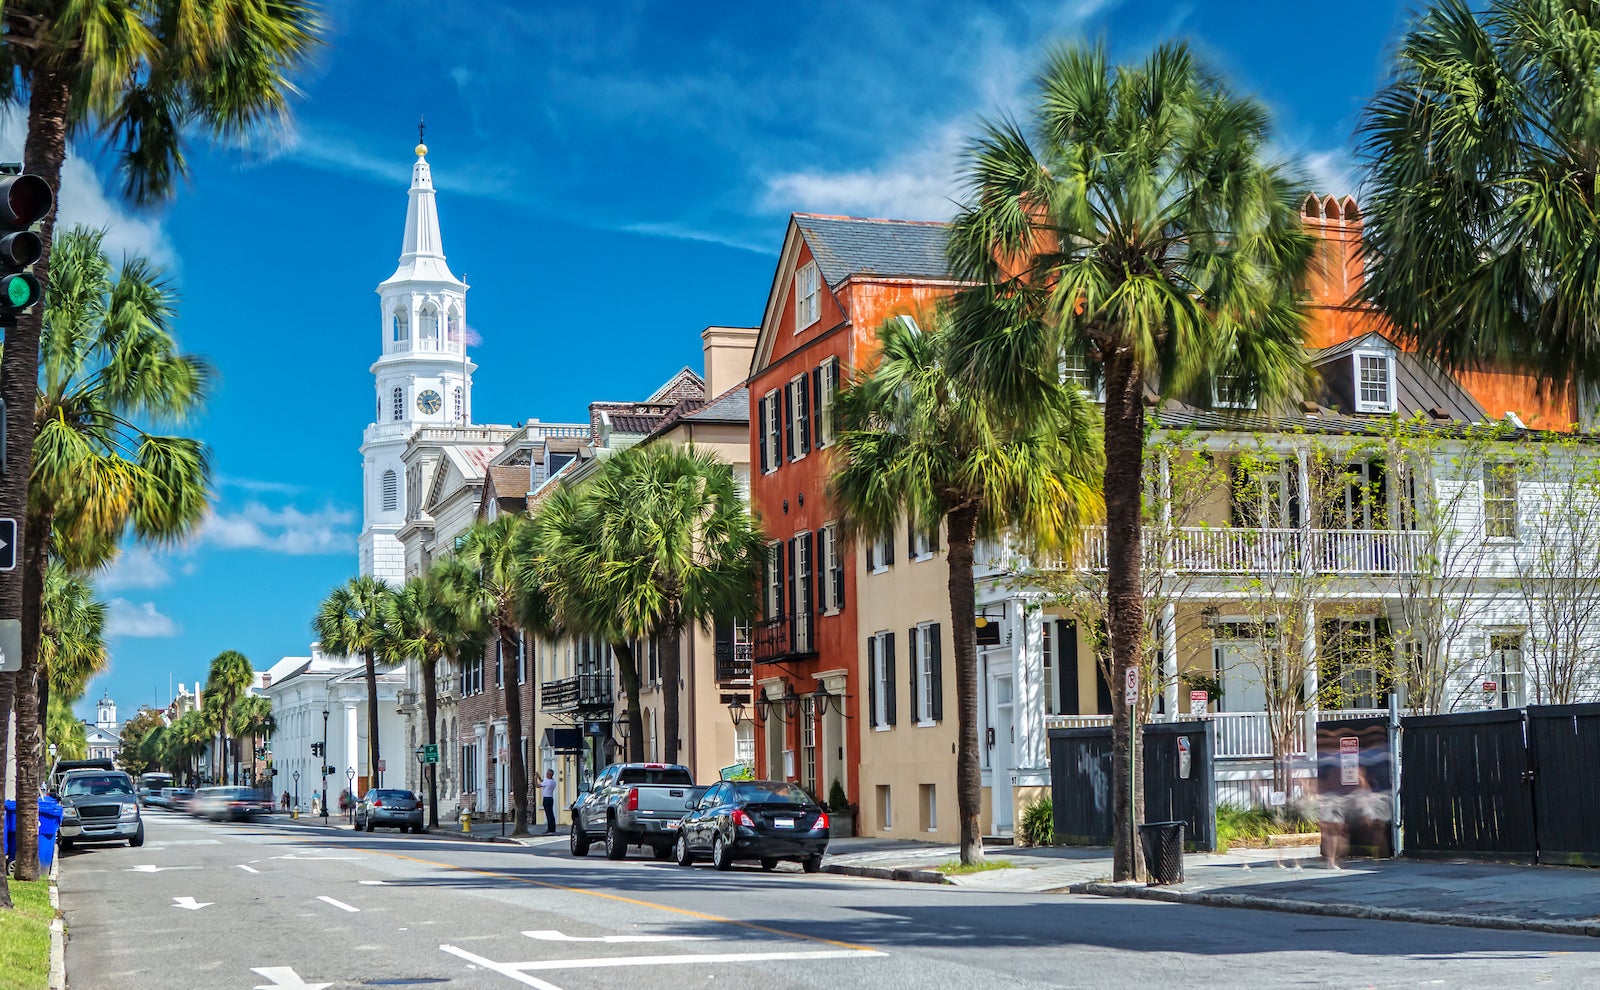 Deal Alert: Round-trip to Charleston, S.C. starting at $128